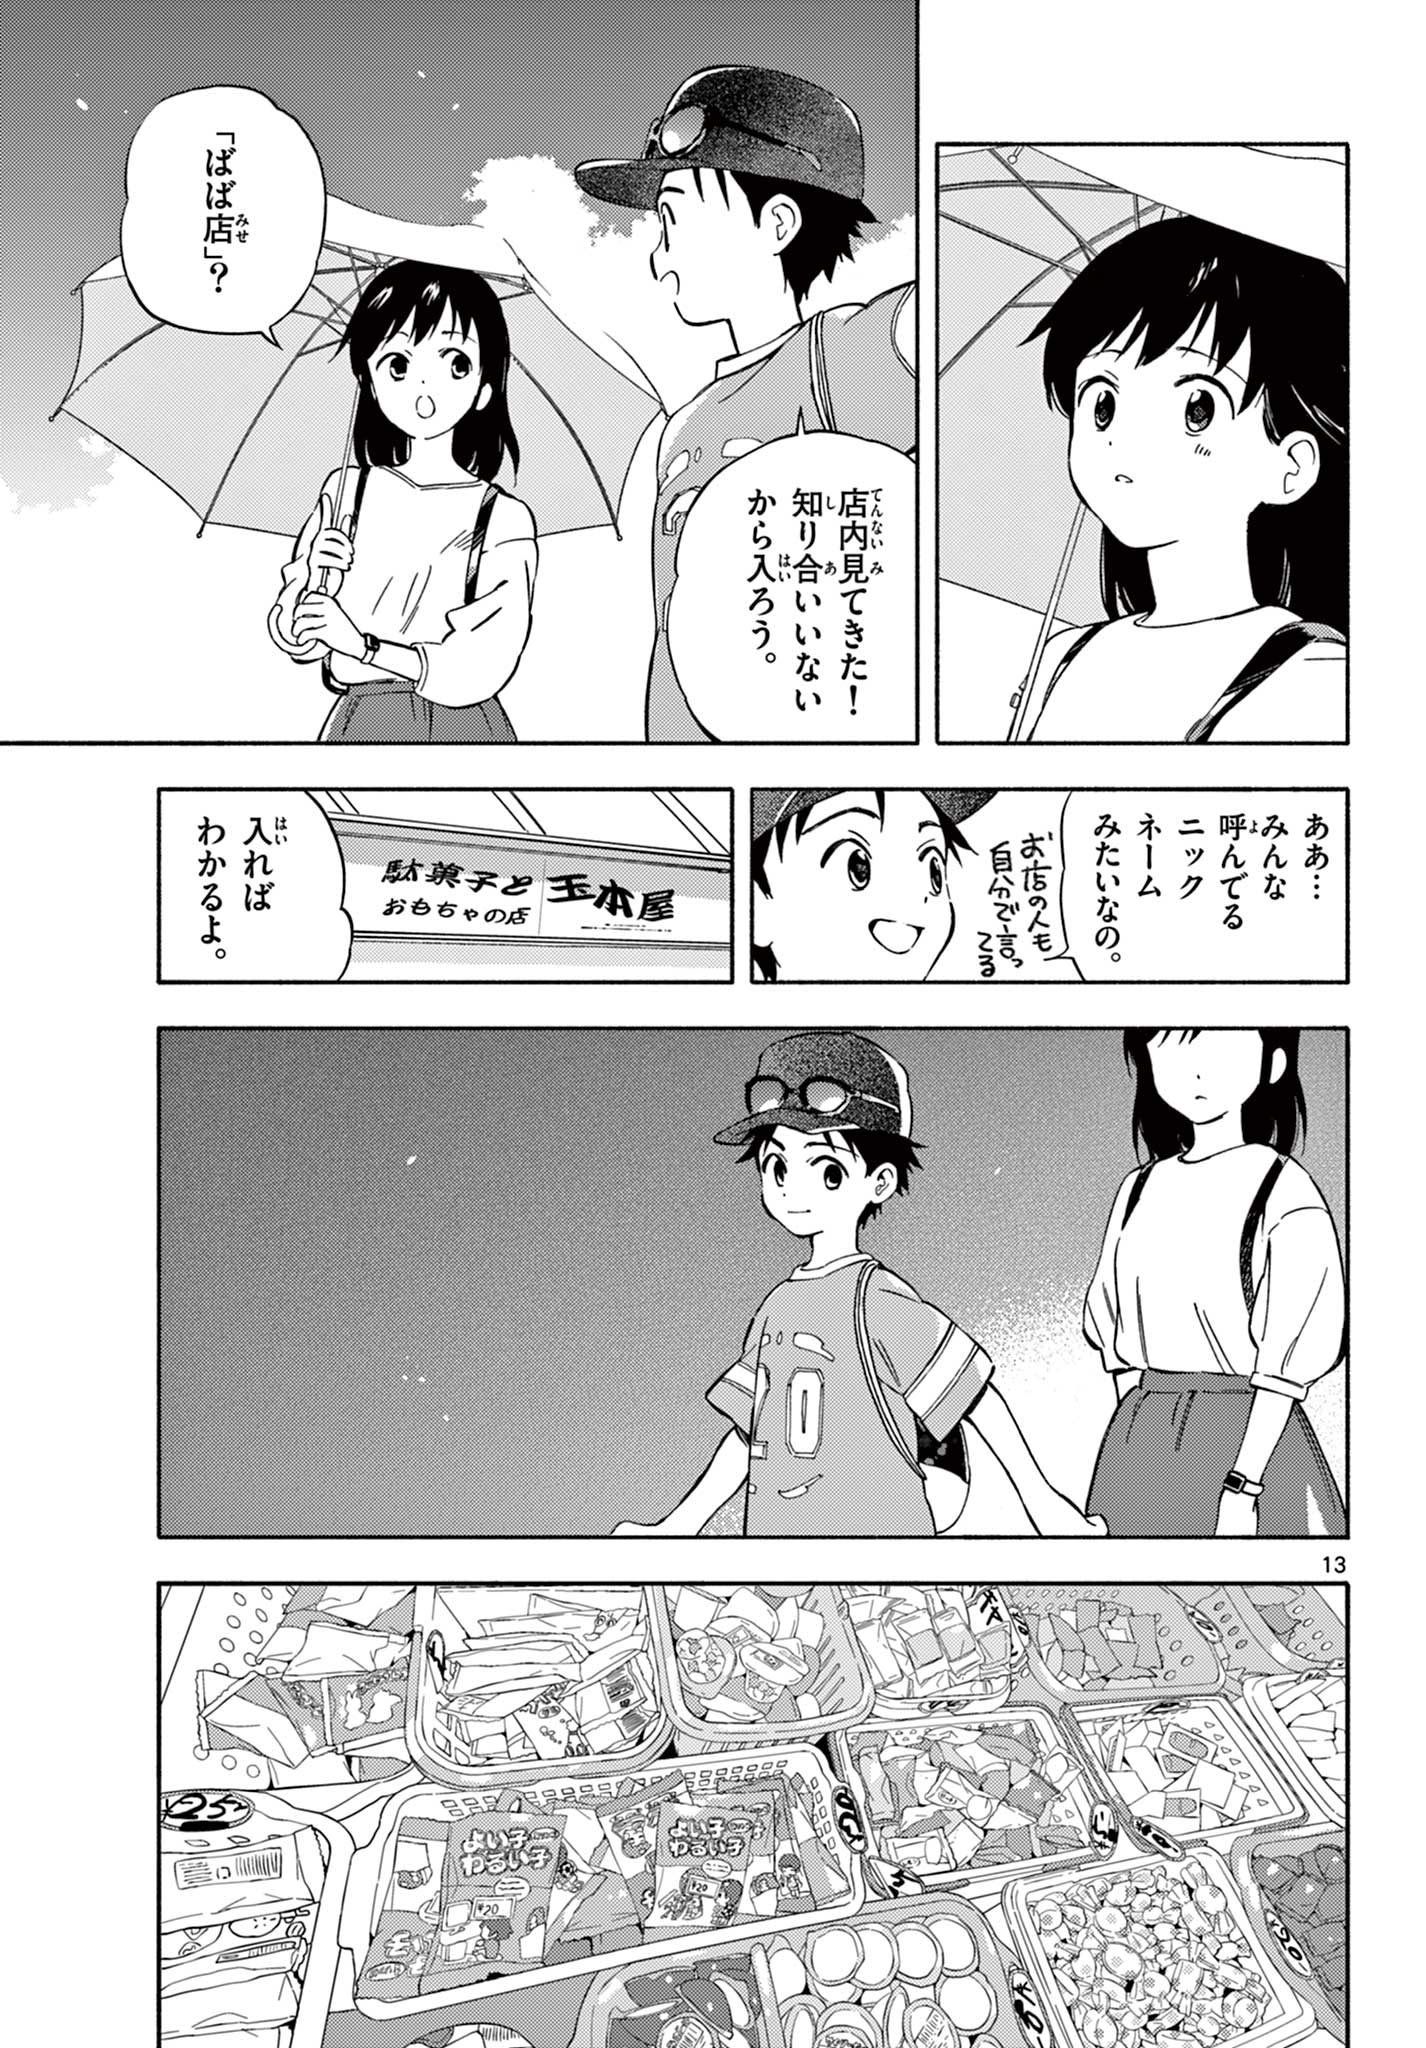 Nami no Shijima no Horizont - Chapter 9.2 - Page 1